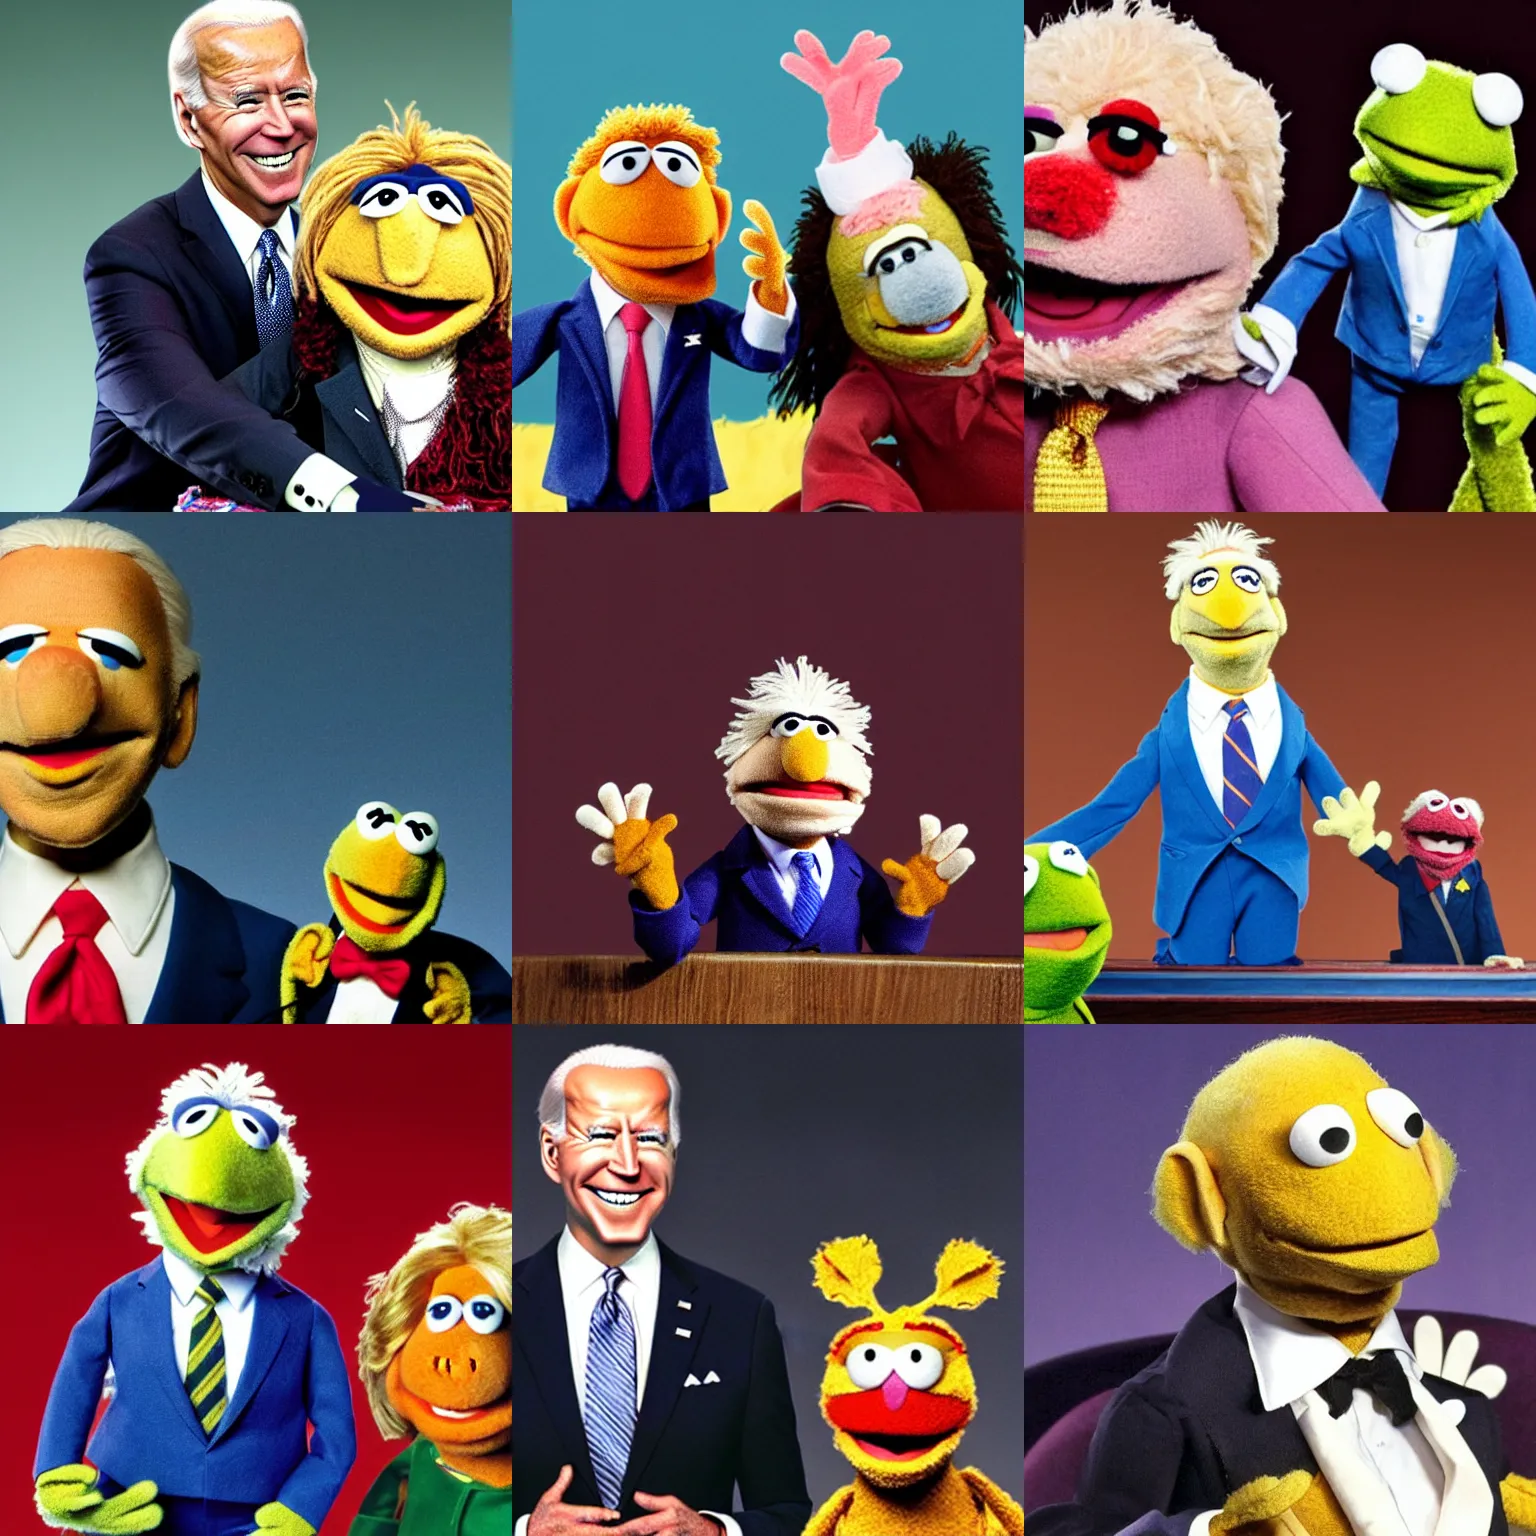 Prompt: Joe Biden as a muppet in the Muppet Show